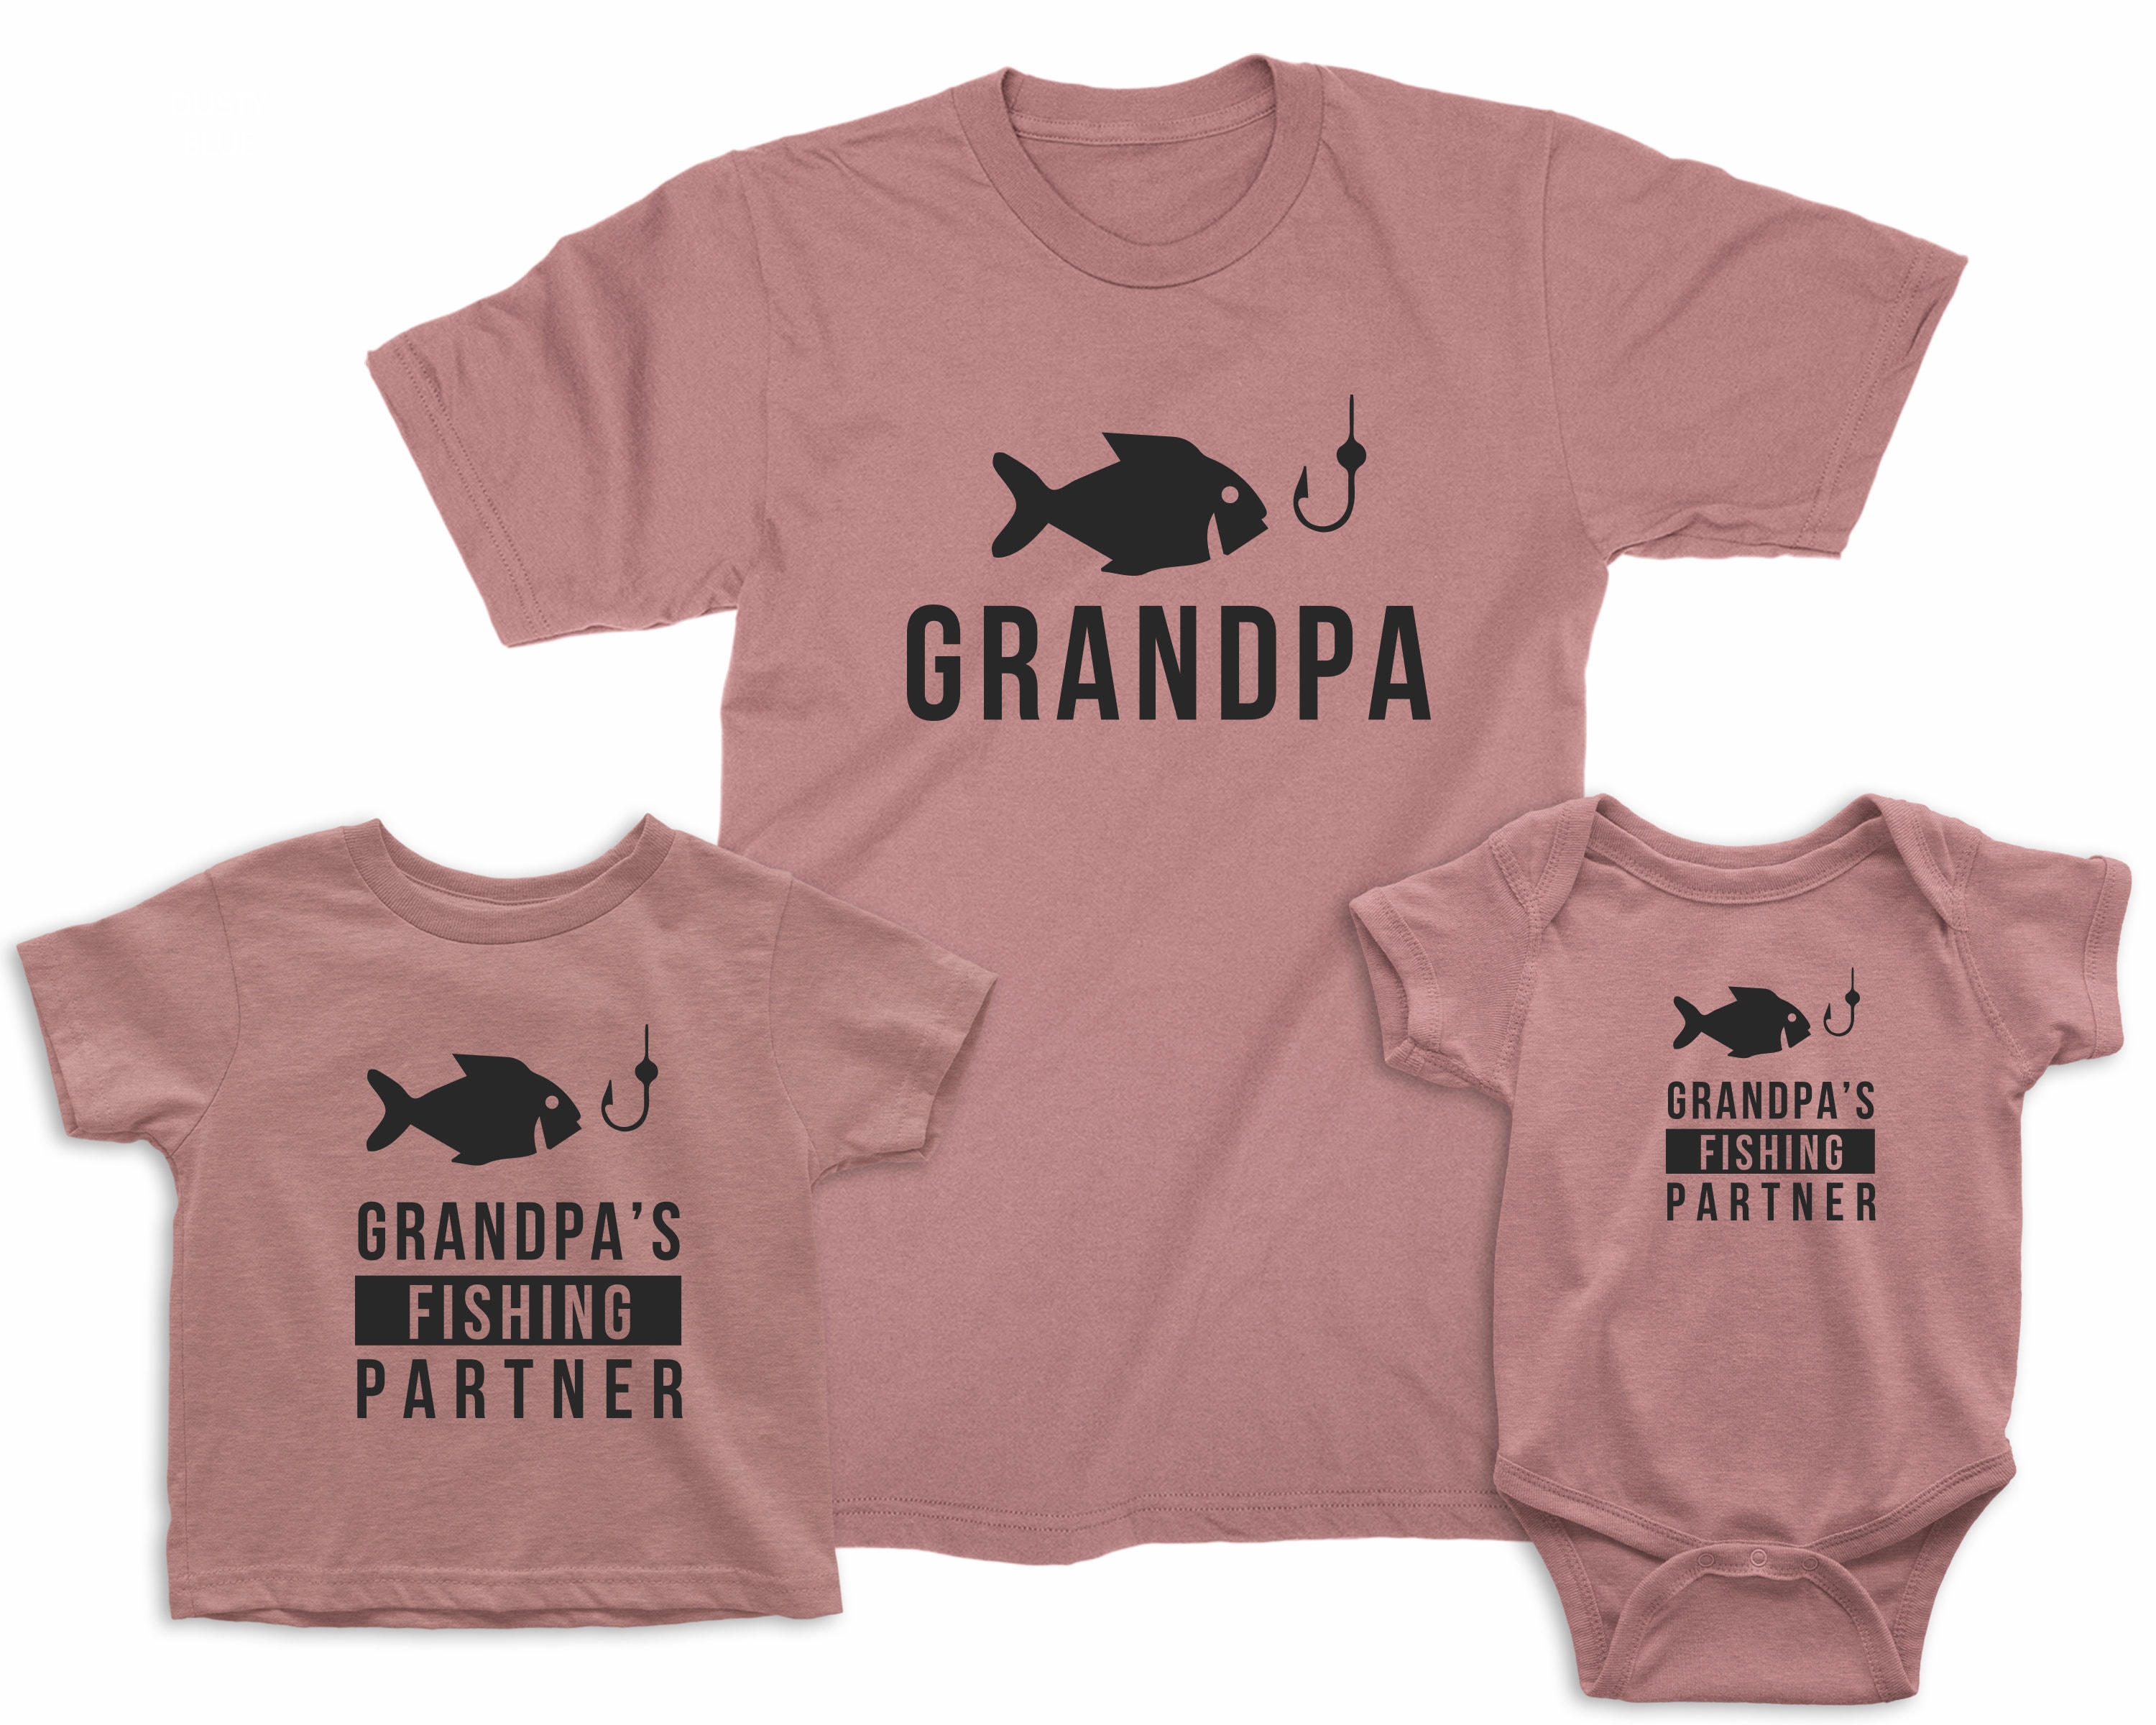 Grandpa and Grandpa's Fishing Partner. Matching T-shirts for